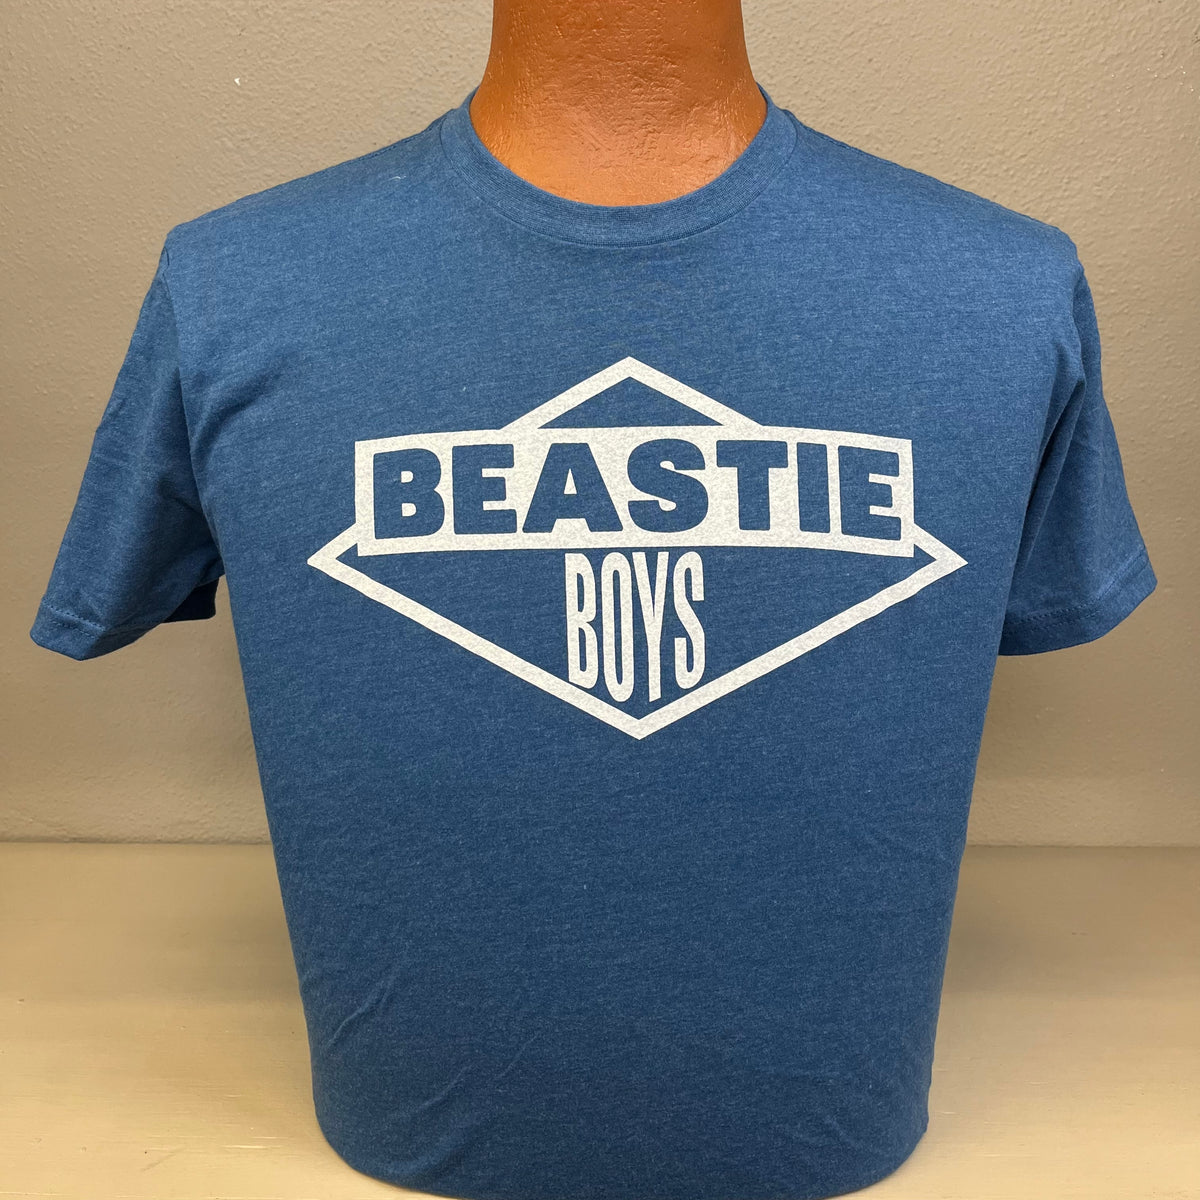 Beastie Boys T-Shirt at Carrol's Shoe Corner